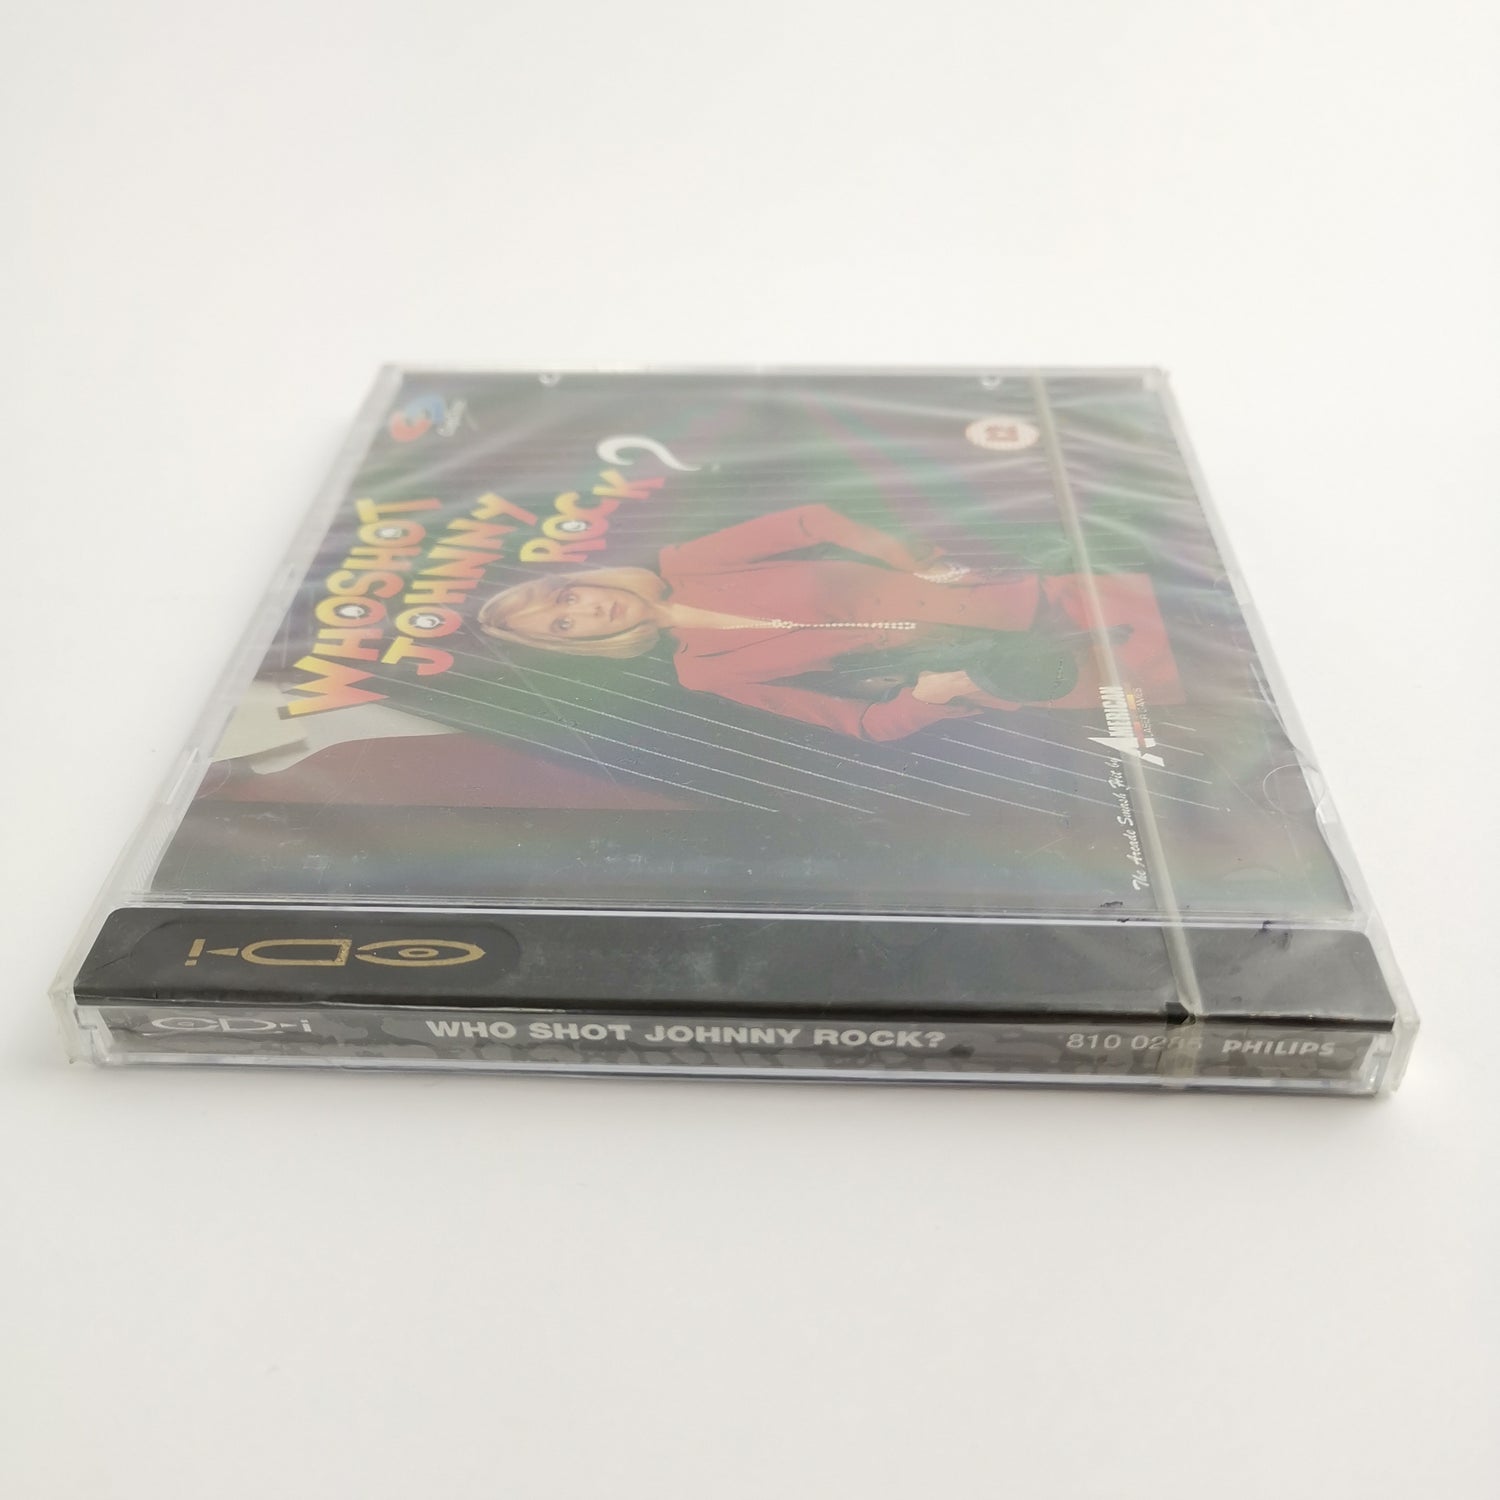 Philips CD-I Spiel 